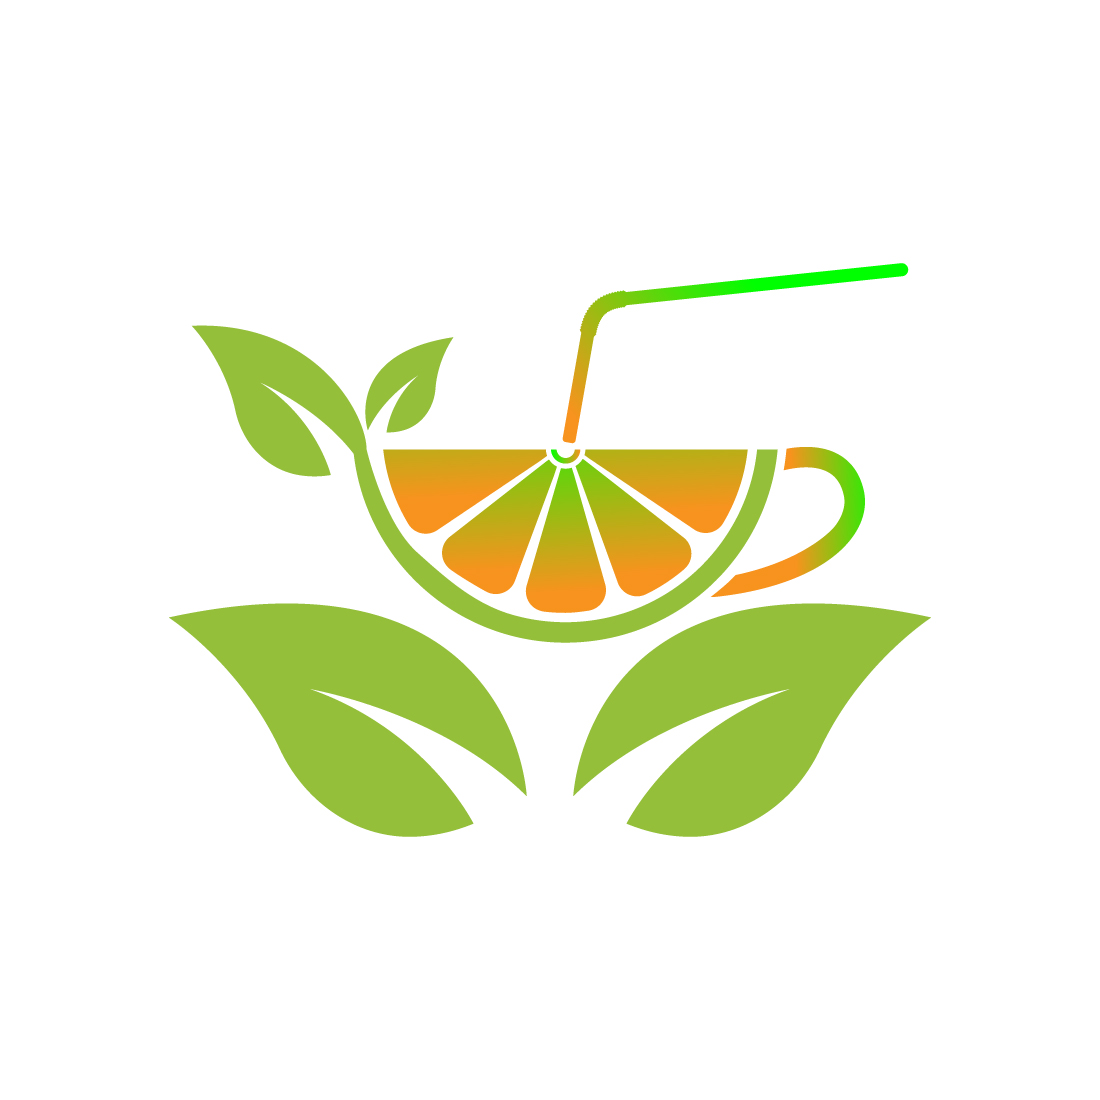 Lemon juice logo design vector images lemon Fresh Fruit logo template icon design preview image.